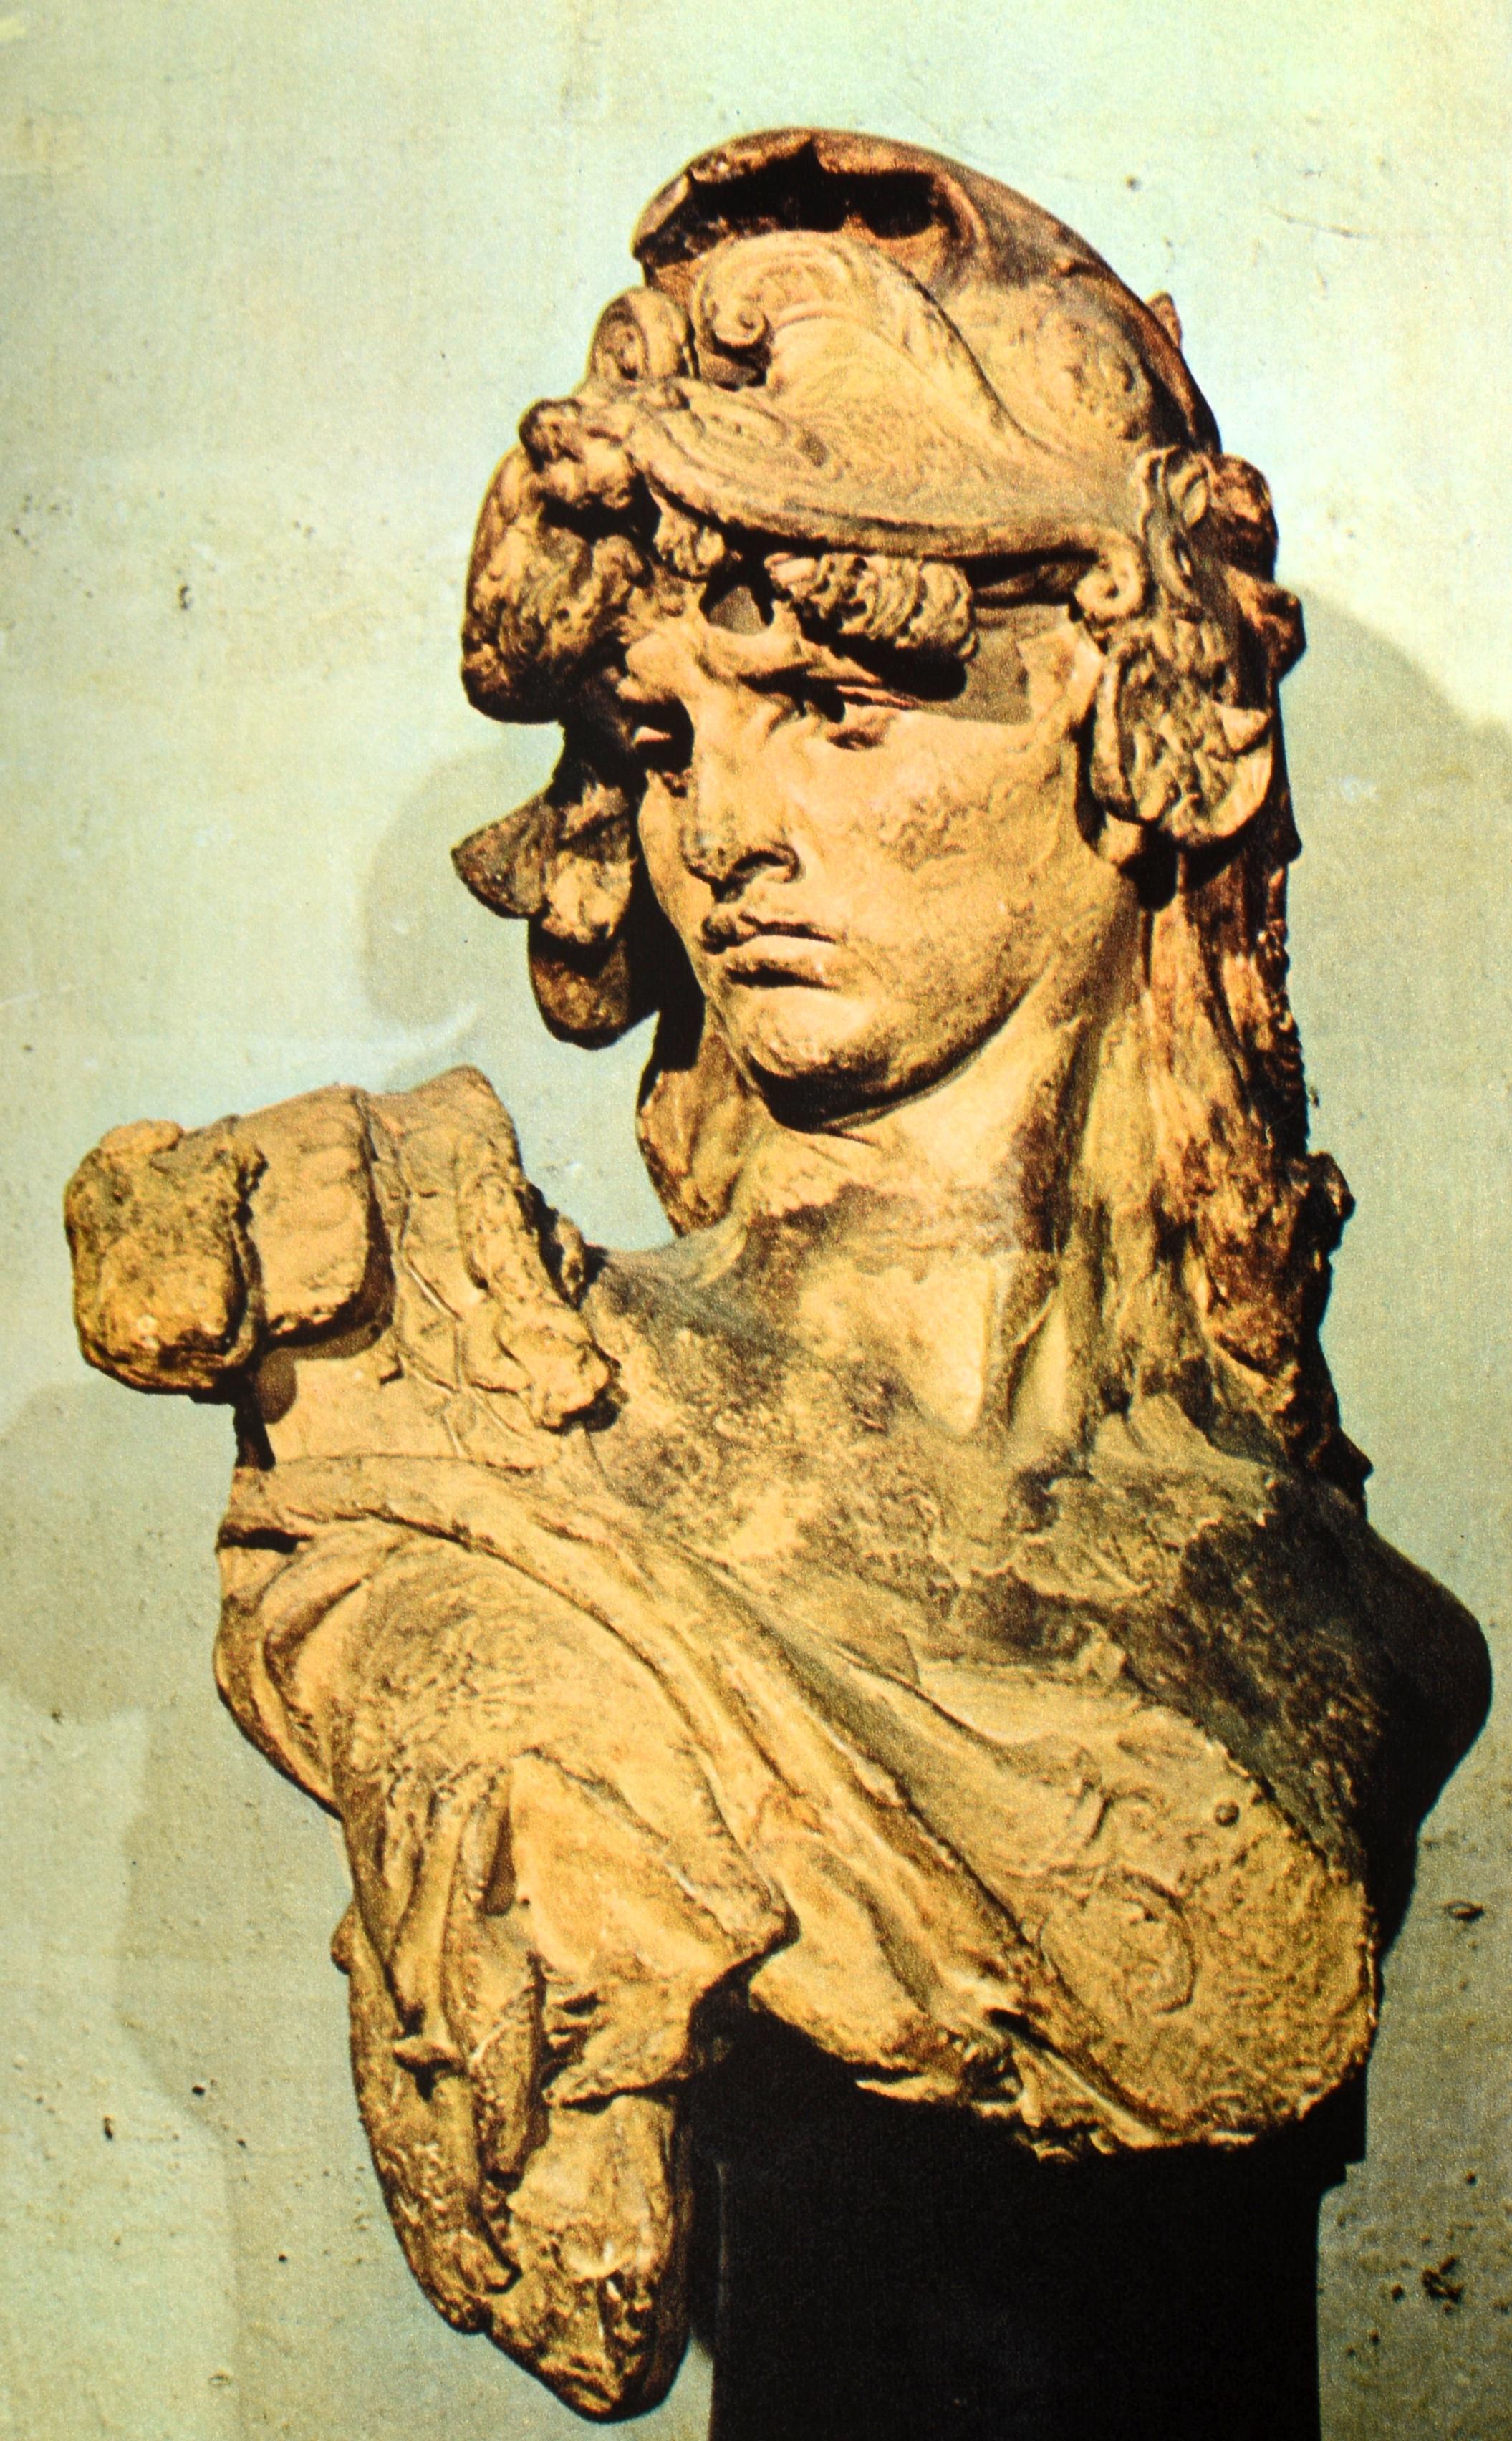 Rodin by Robert Descharnes and Jean-François Chabrun, First Edition 11